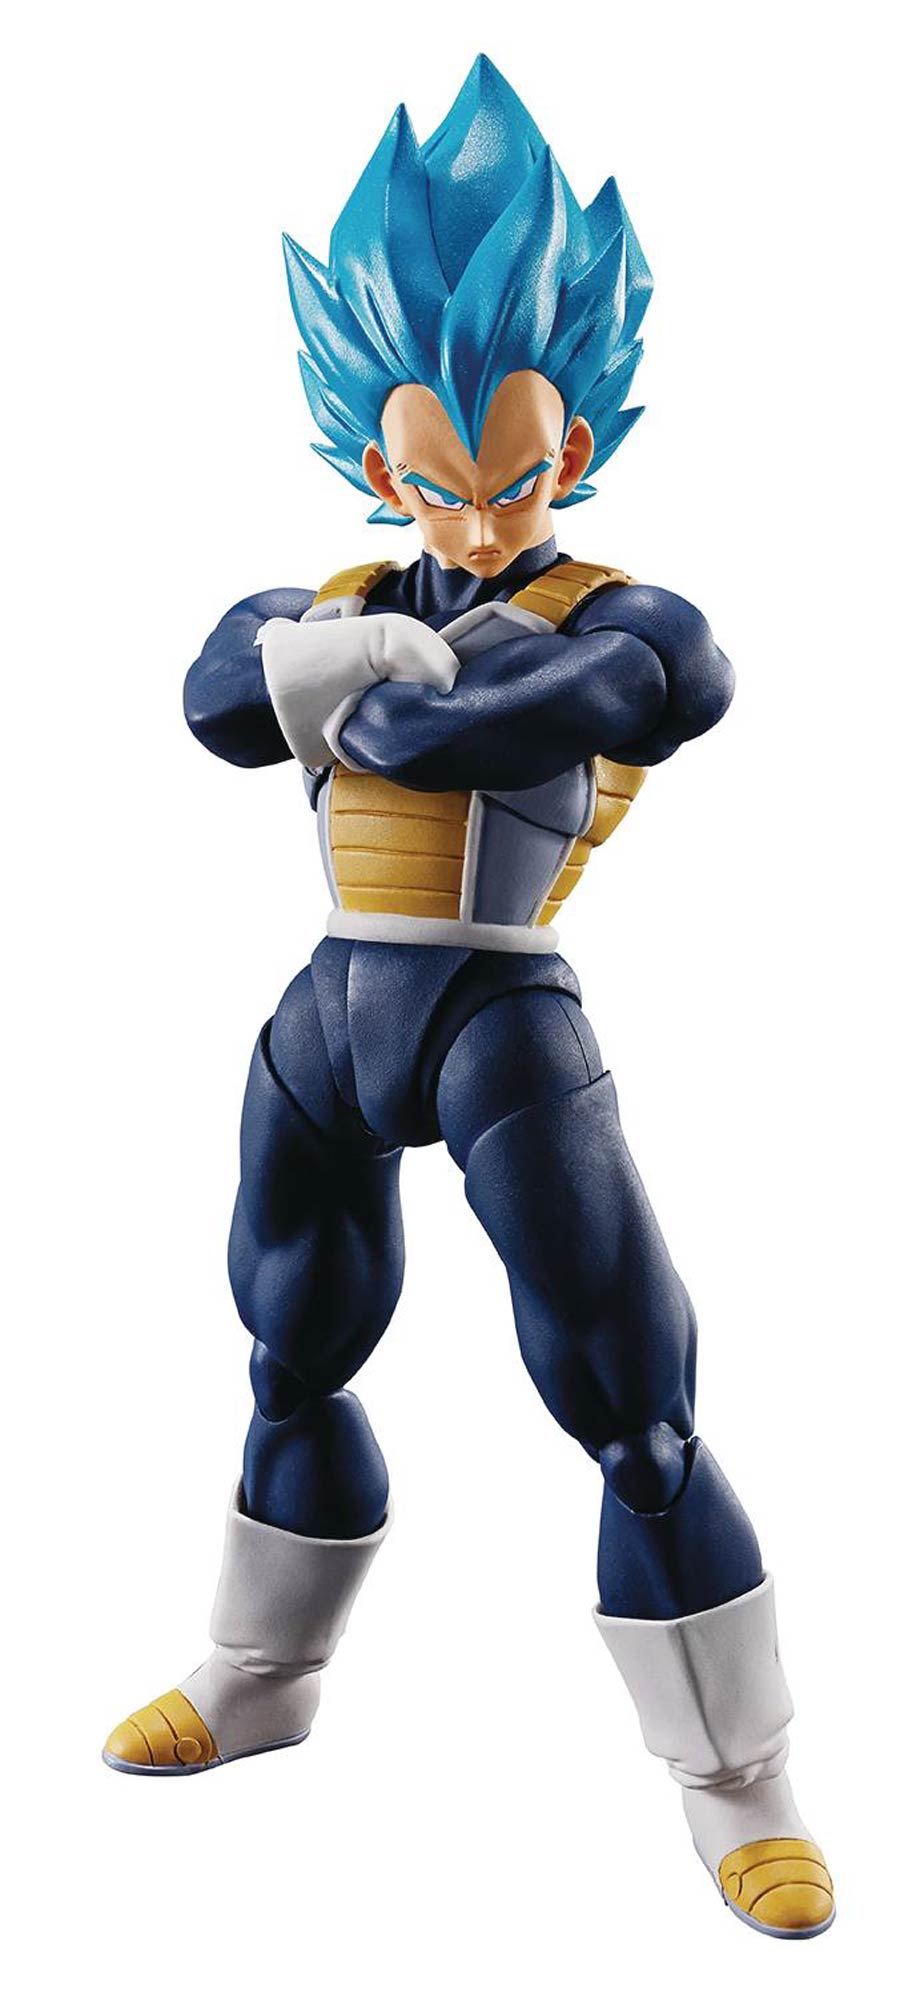 Dragon Ball Super Broly S.H.Figuarts - Super Saiyan God Super Saiyan Vegeta Action Figure